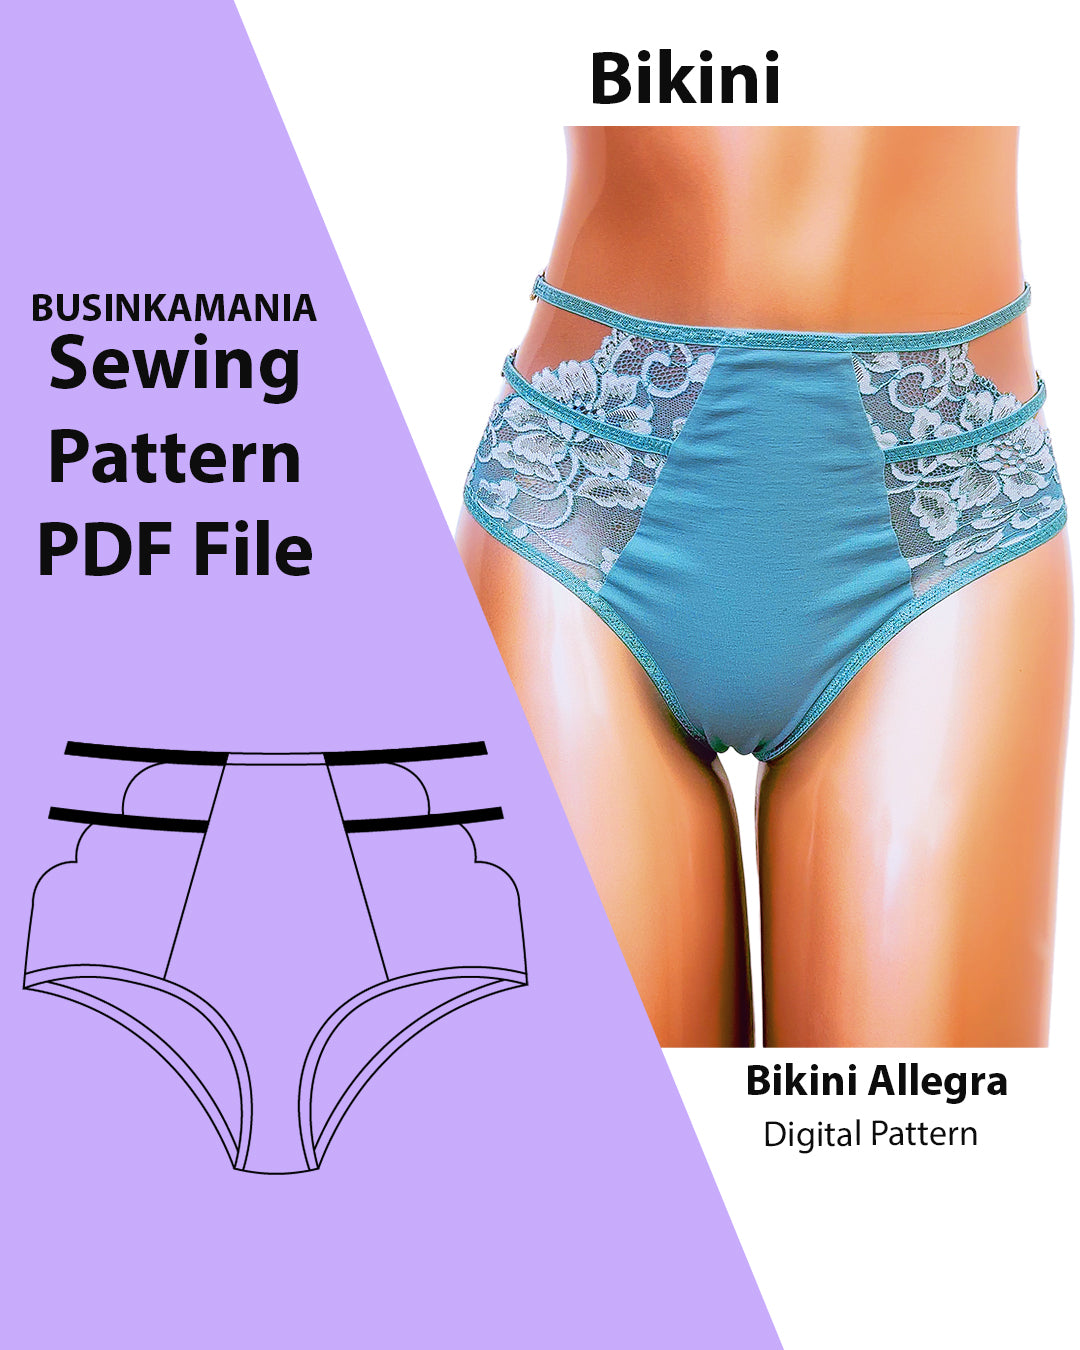 Bikini Allegra Sewing Pattern